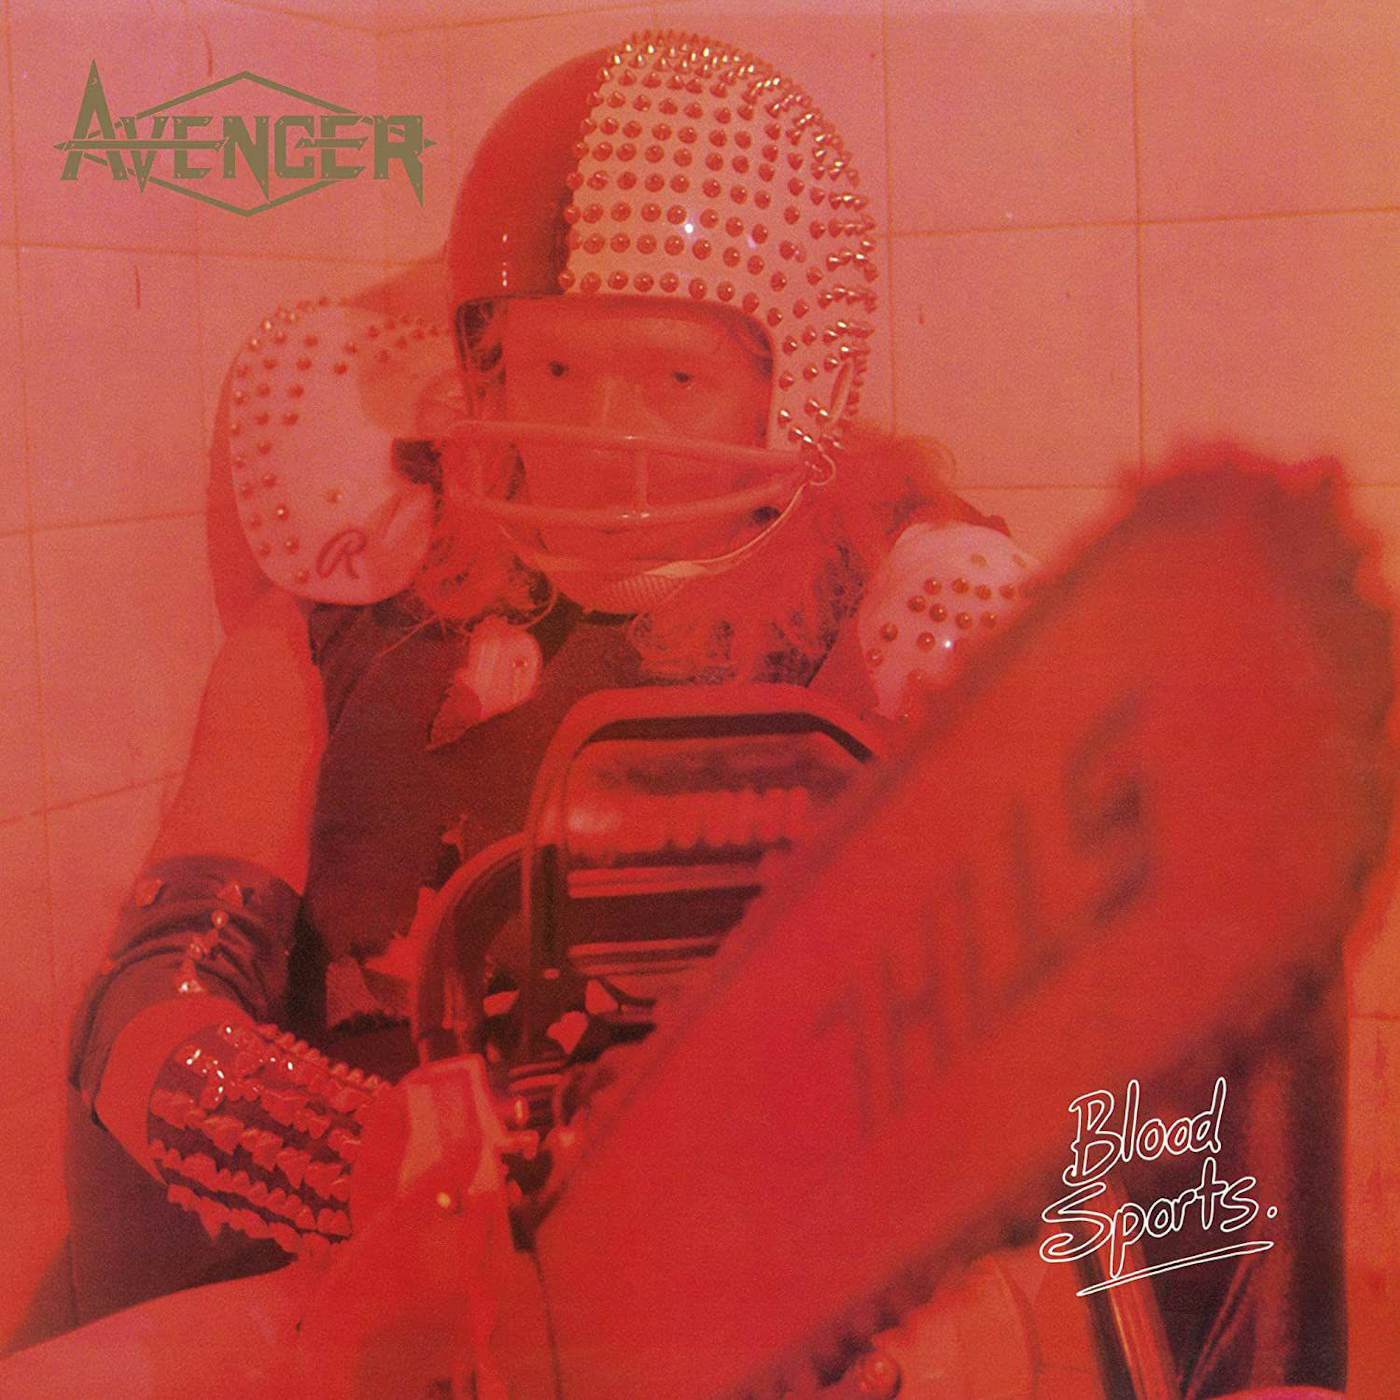 Avenger Blood Sports (Red) Vinyl Record